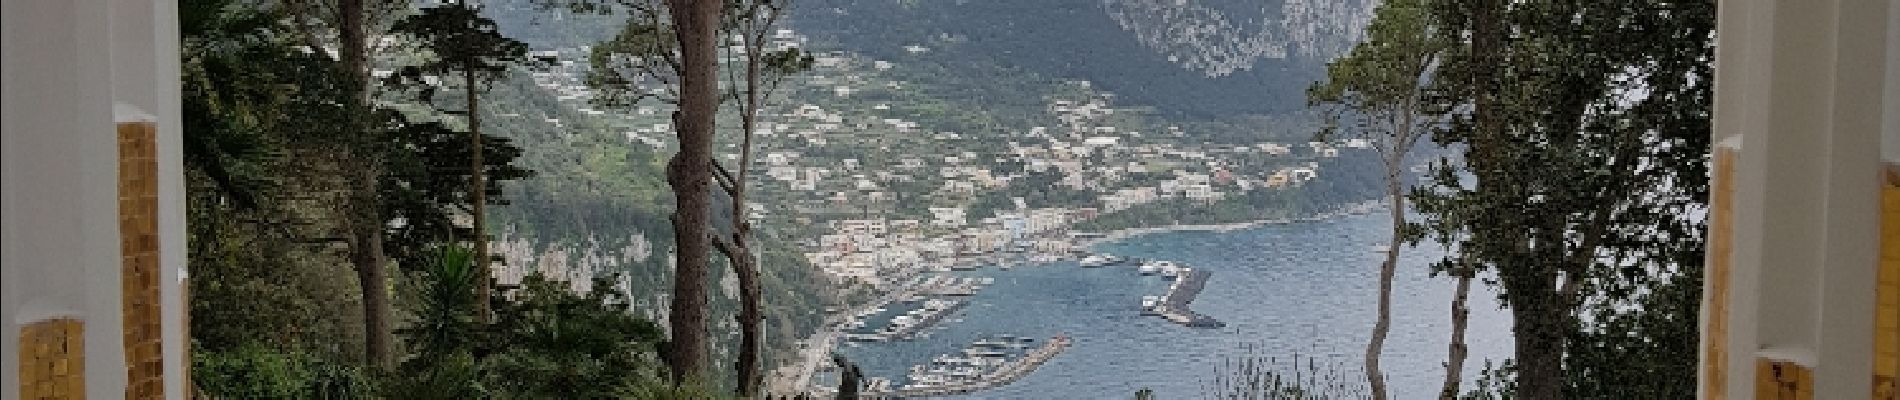 Randonnée Marche Capri - Capri - Villa Lysis - Photo